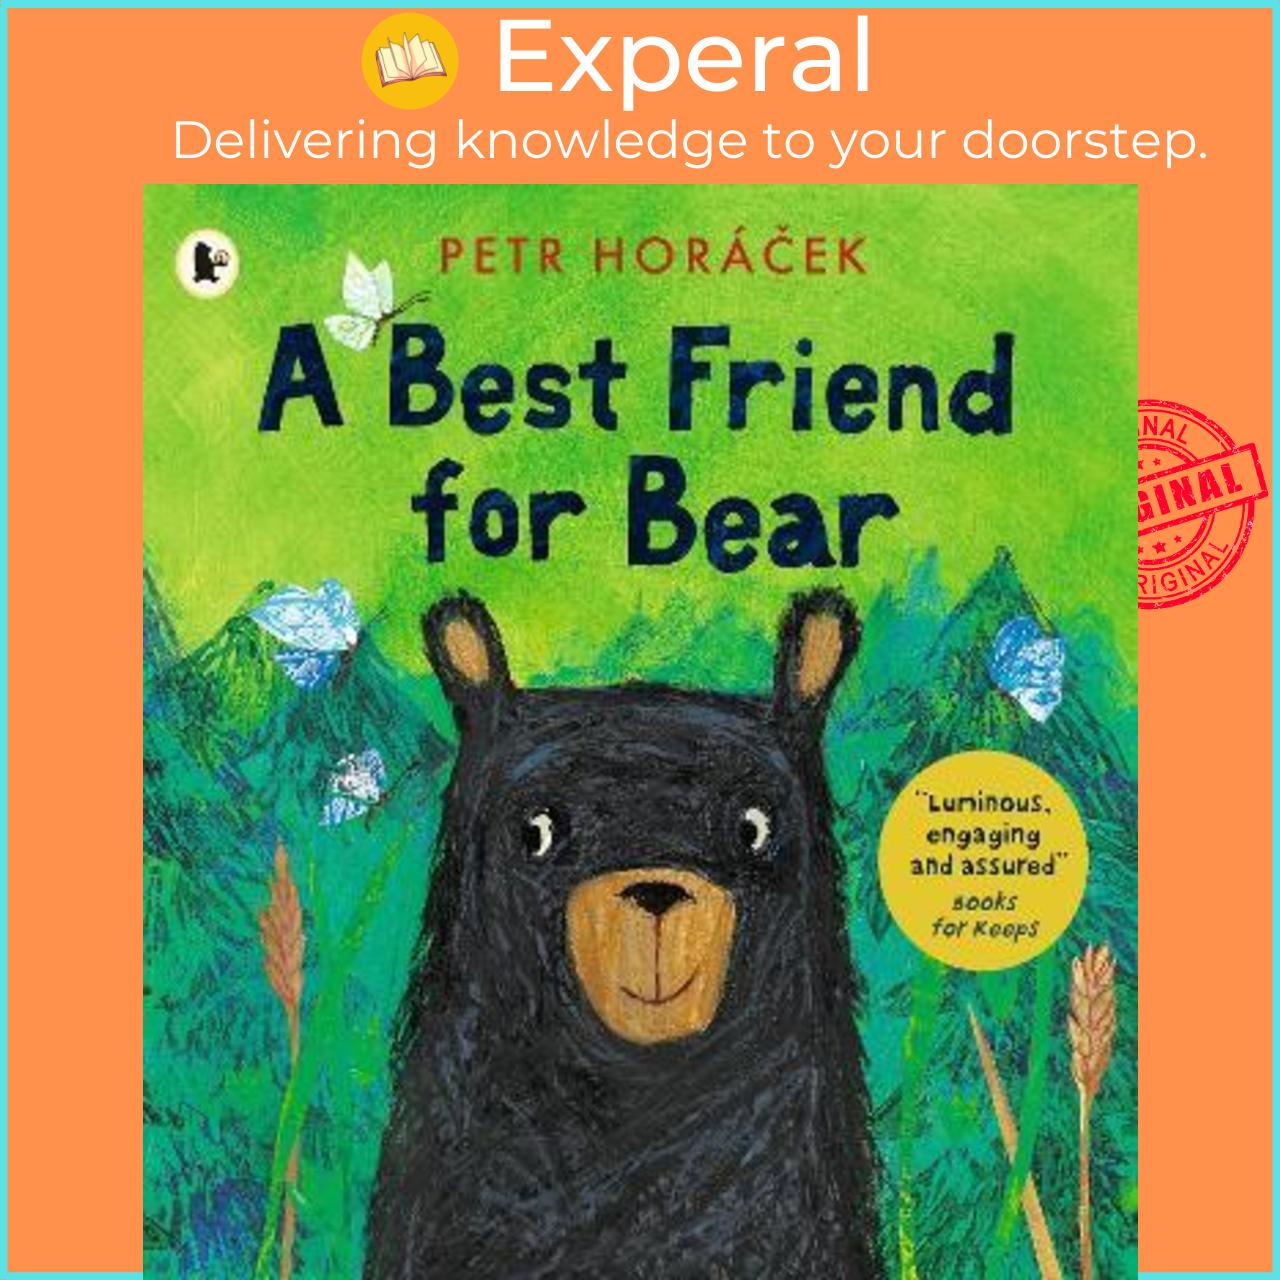 Sách - A Best Friend for Bear by Petr Horacek (UK edition, paperback)